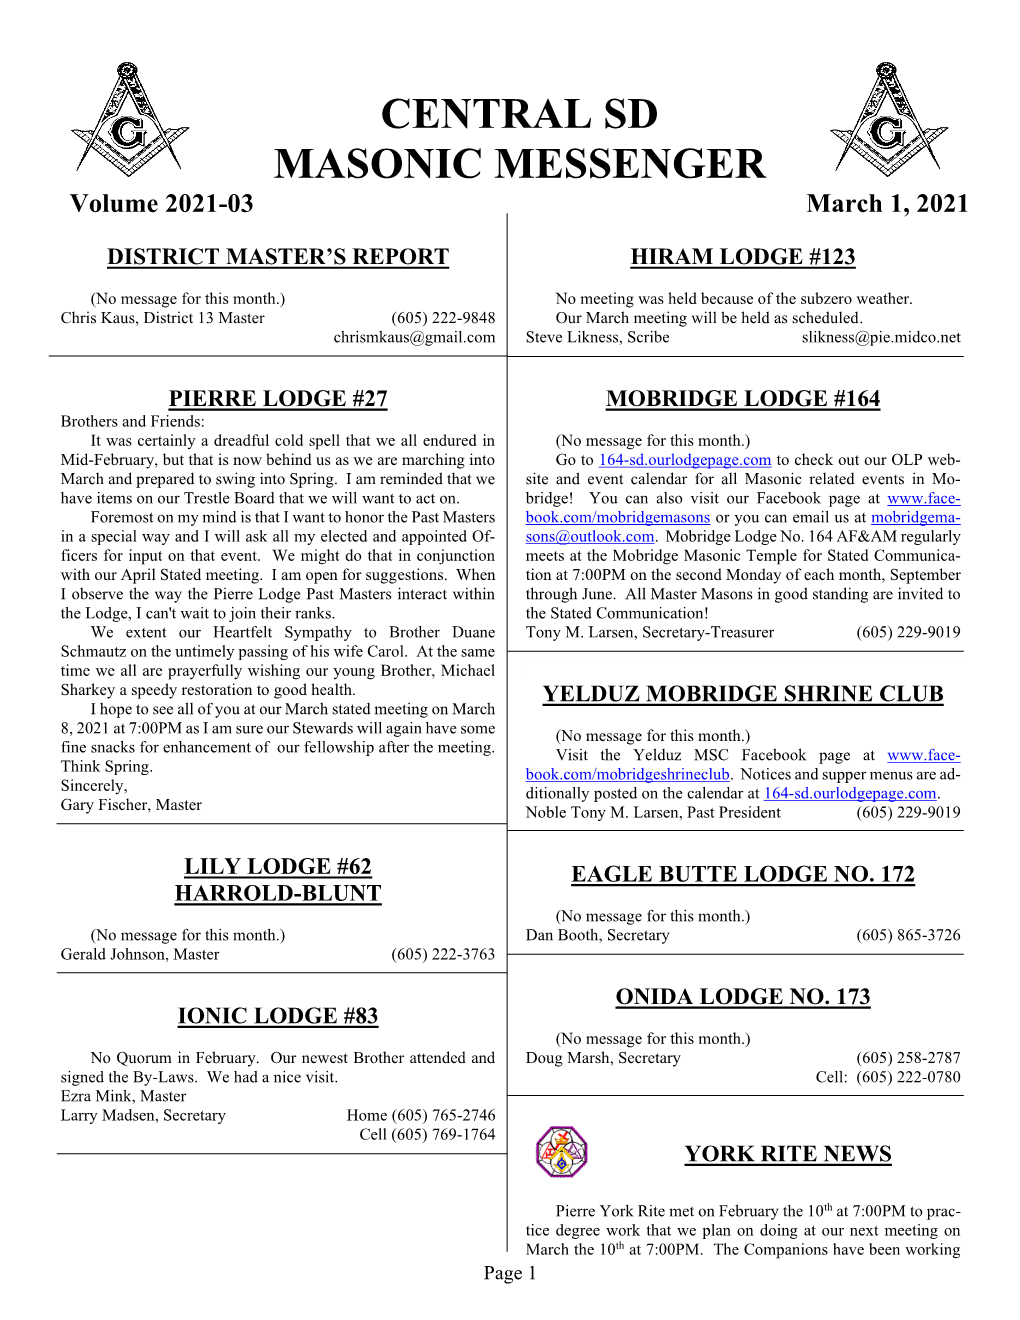 Mar. 2021 Central SD Masonic Messenger